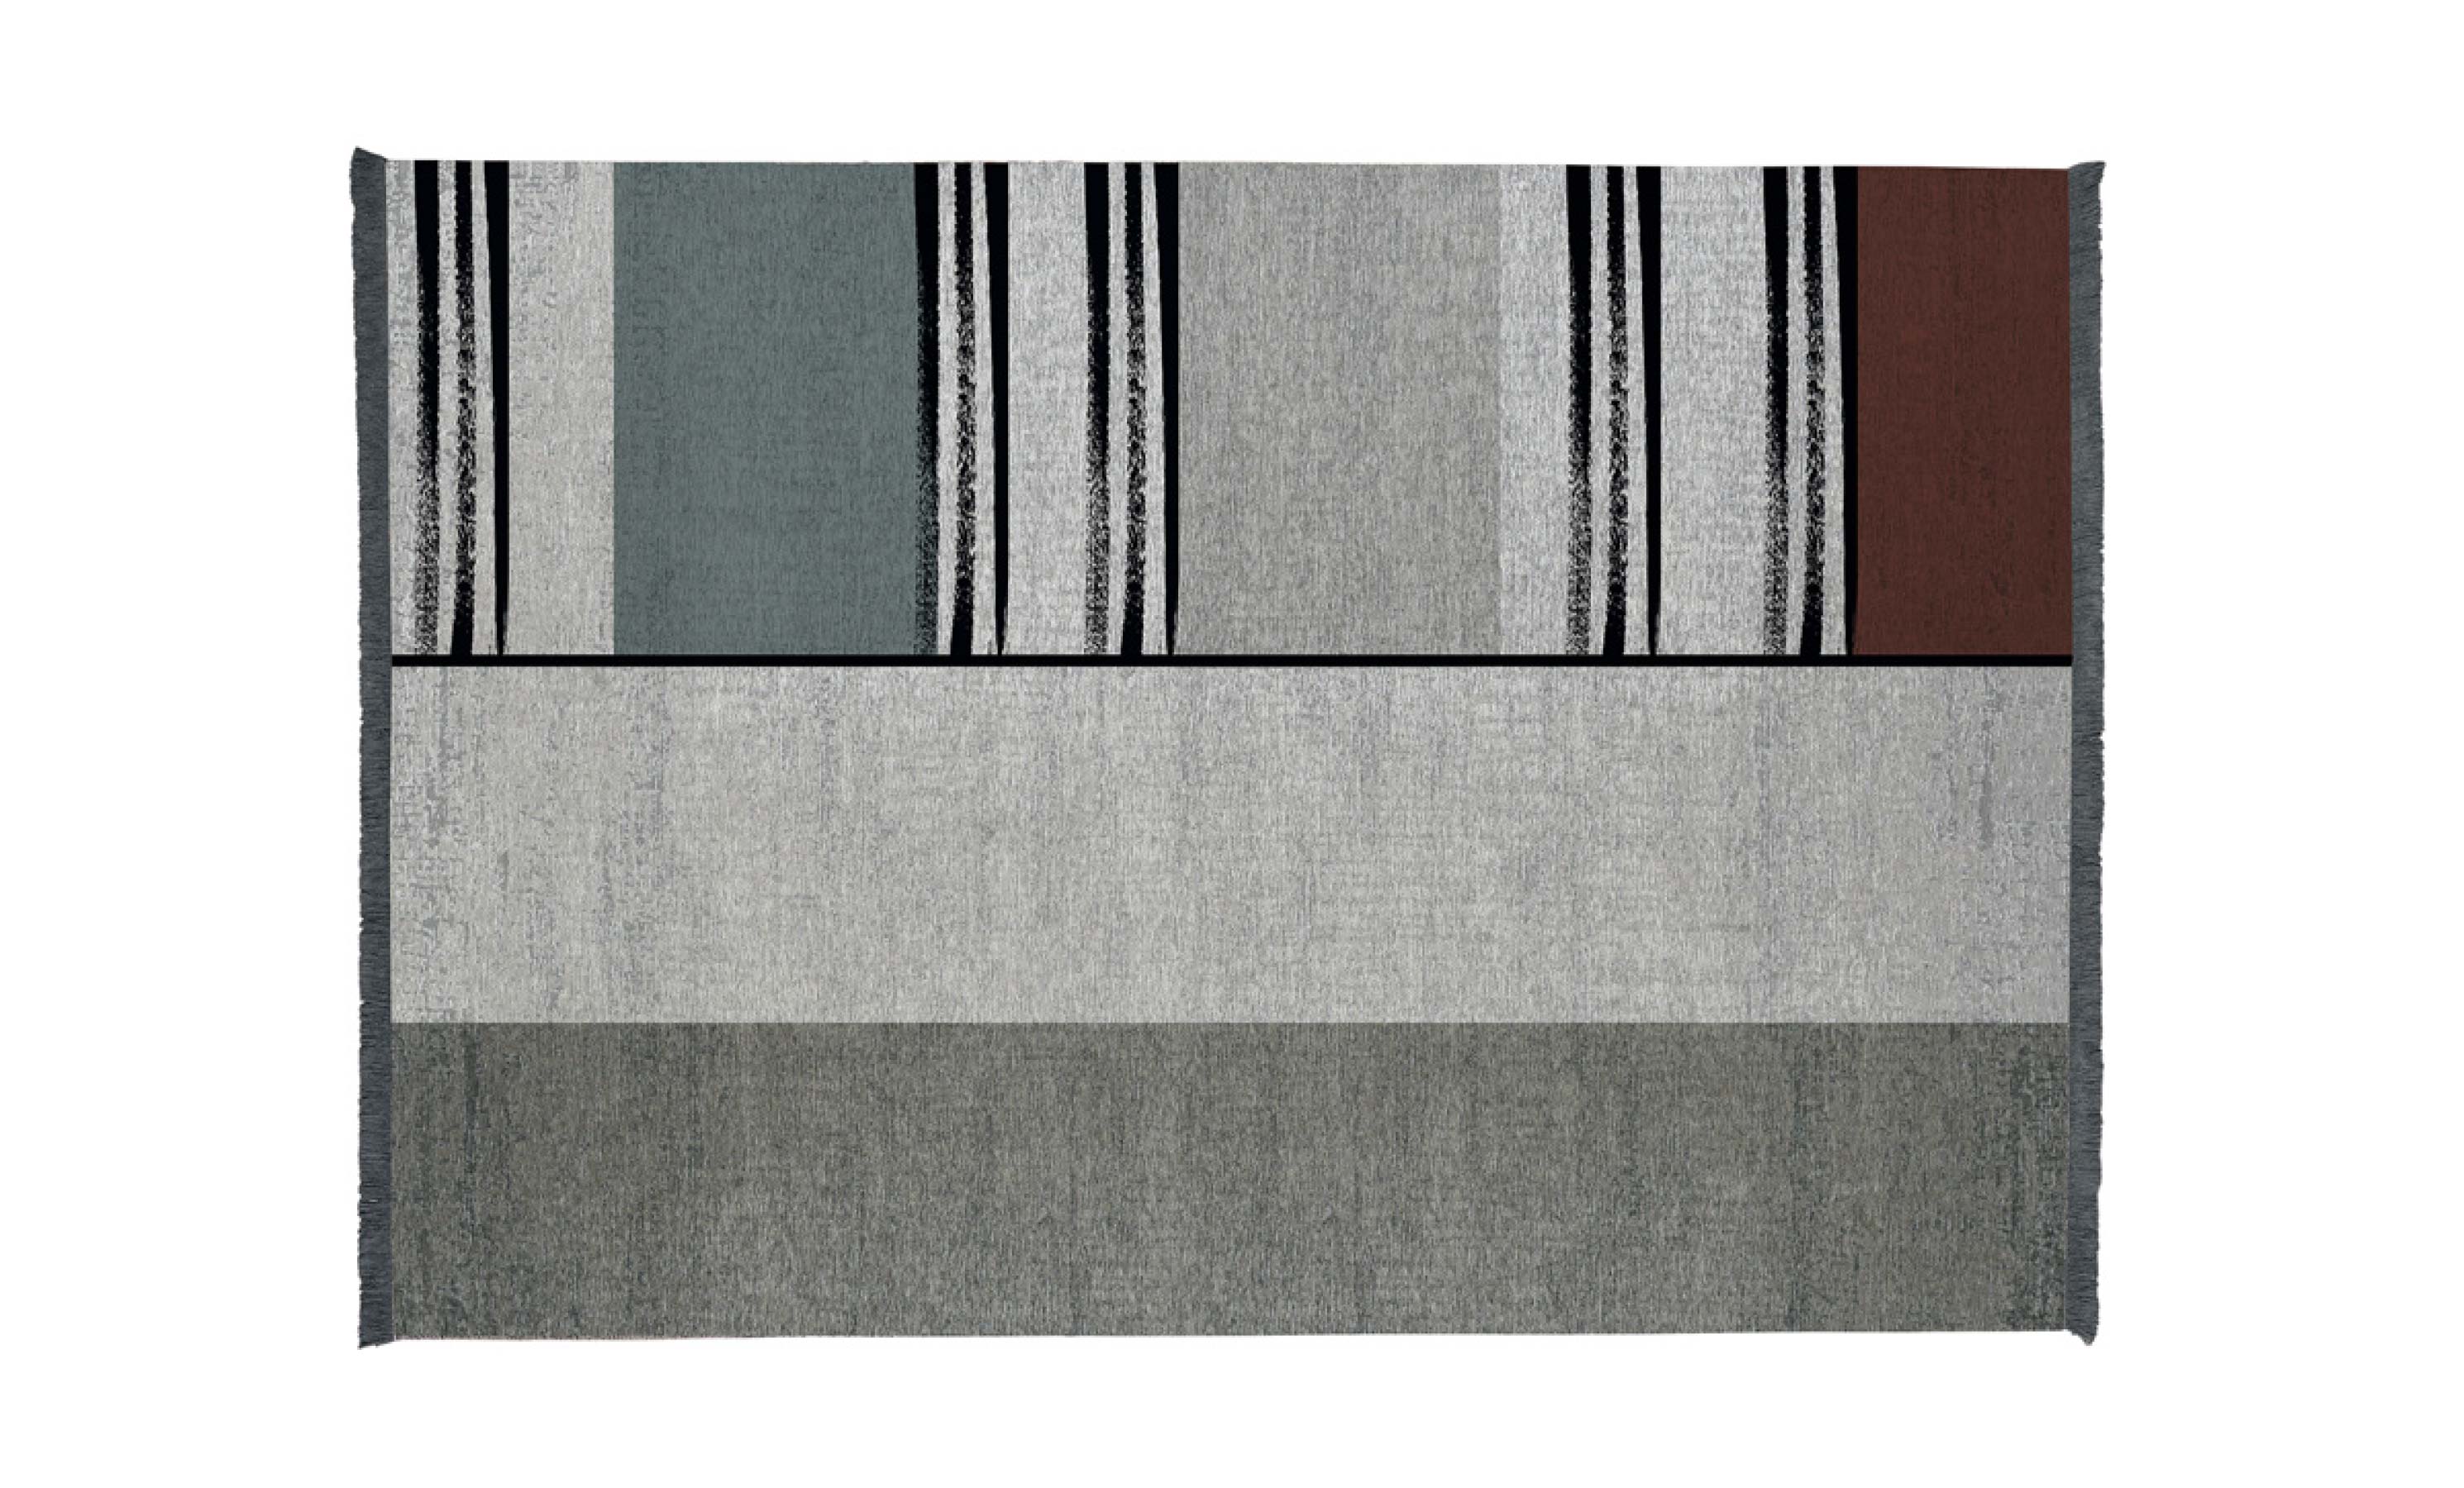 http://desidea.hu/wp-content/uploads/2019/11/tappeto-rug-stripes.jpg